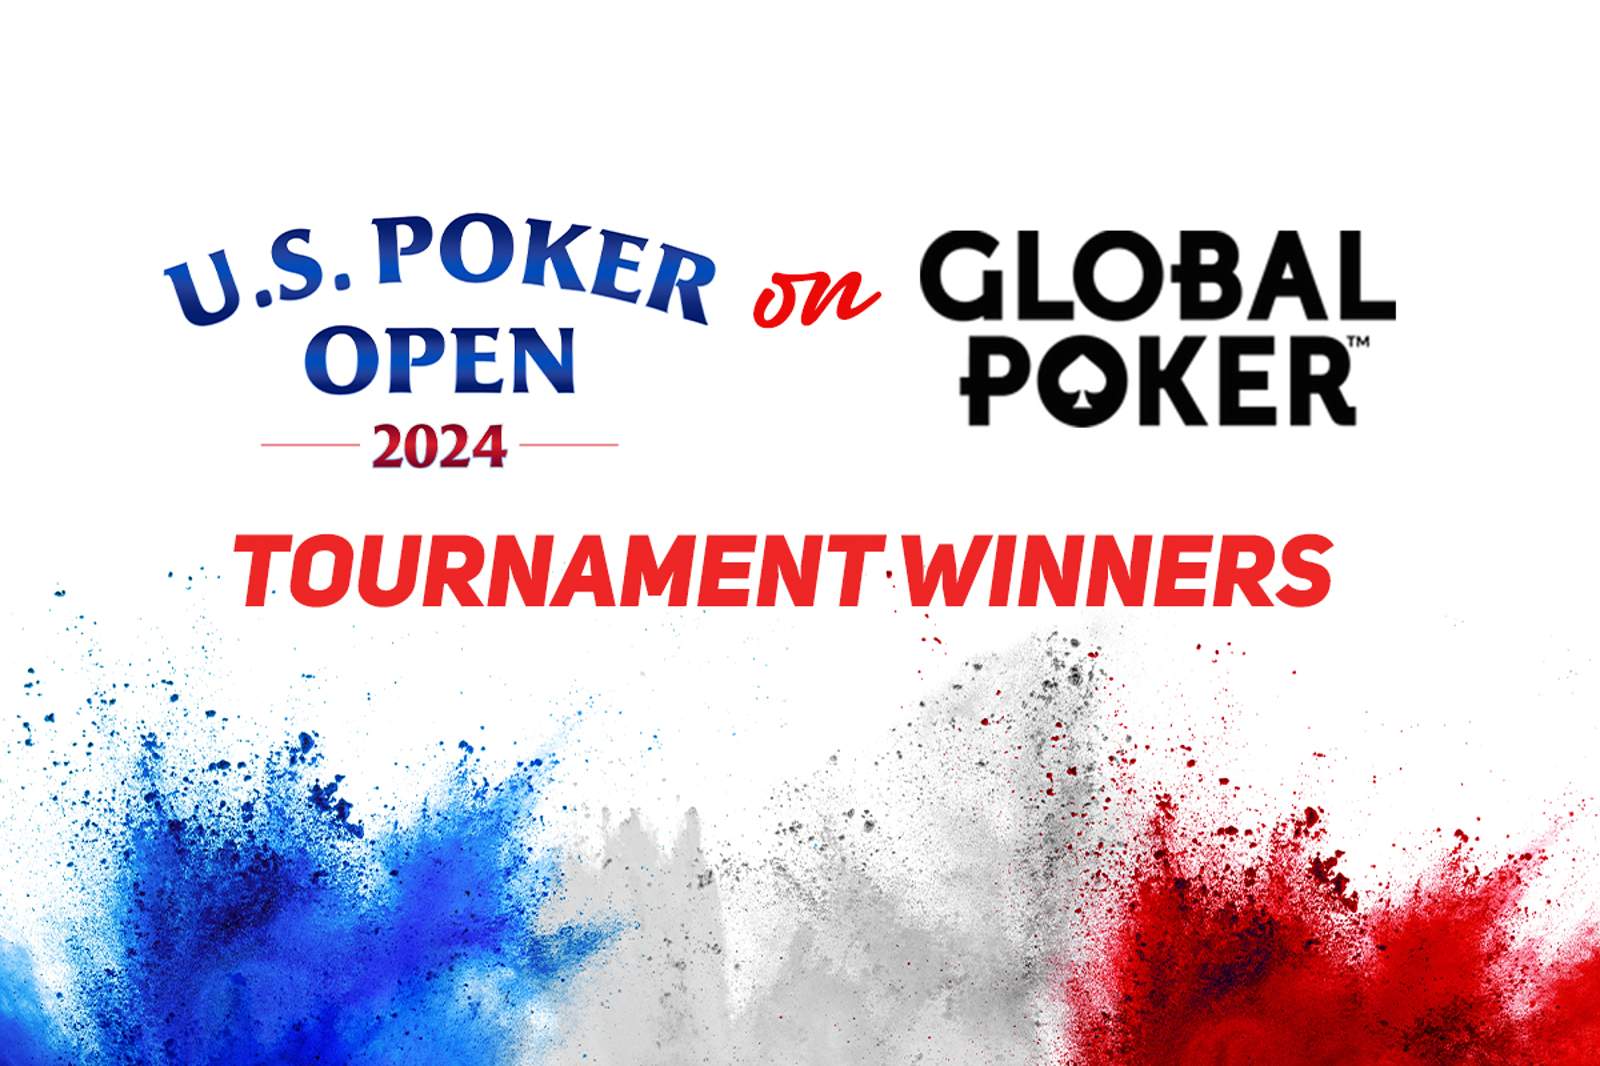 See the Global Poker 2024 U.S. Poker Open Online Results